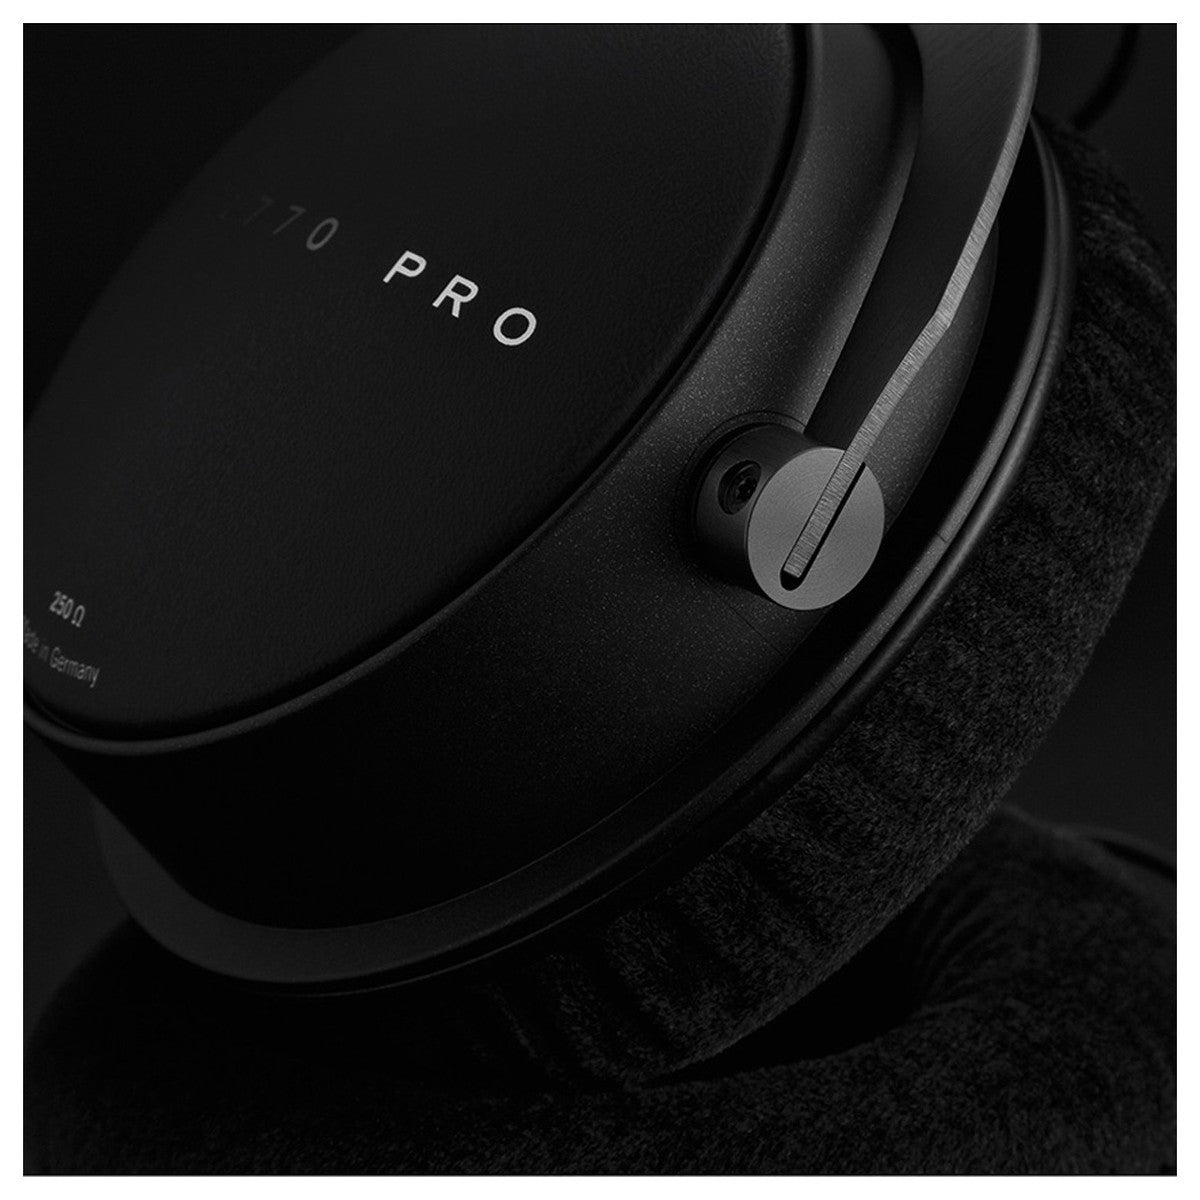 Beyerdynamic DT1770 Pro Studio Headphones